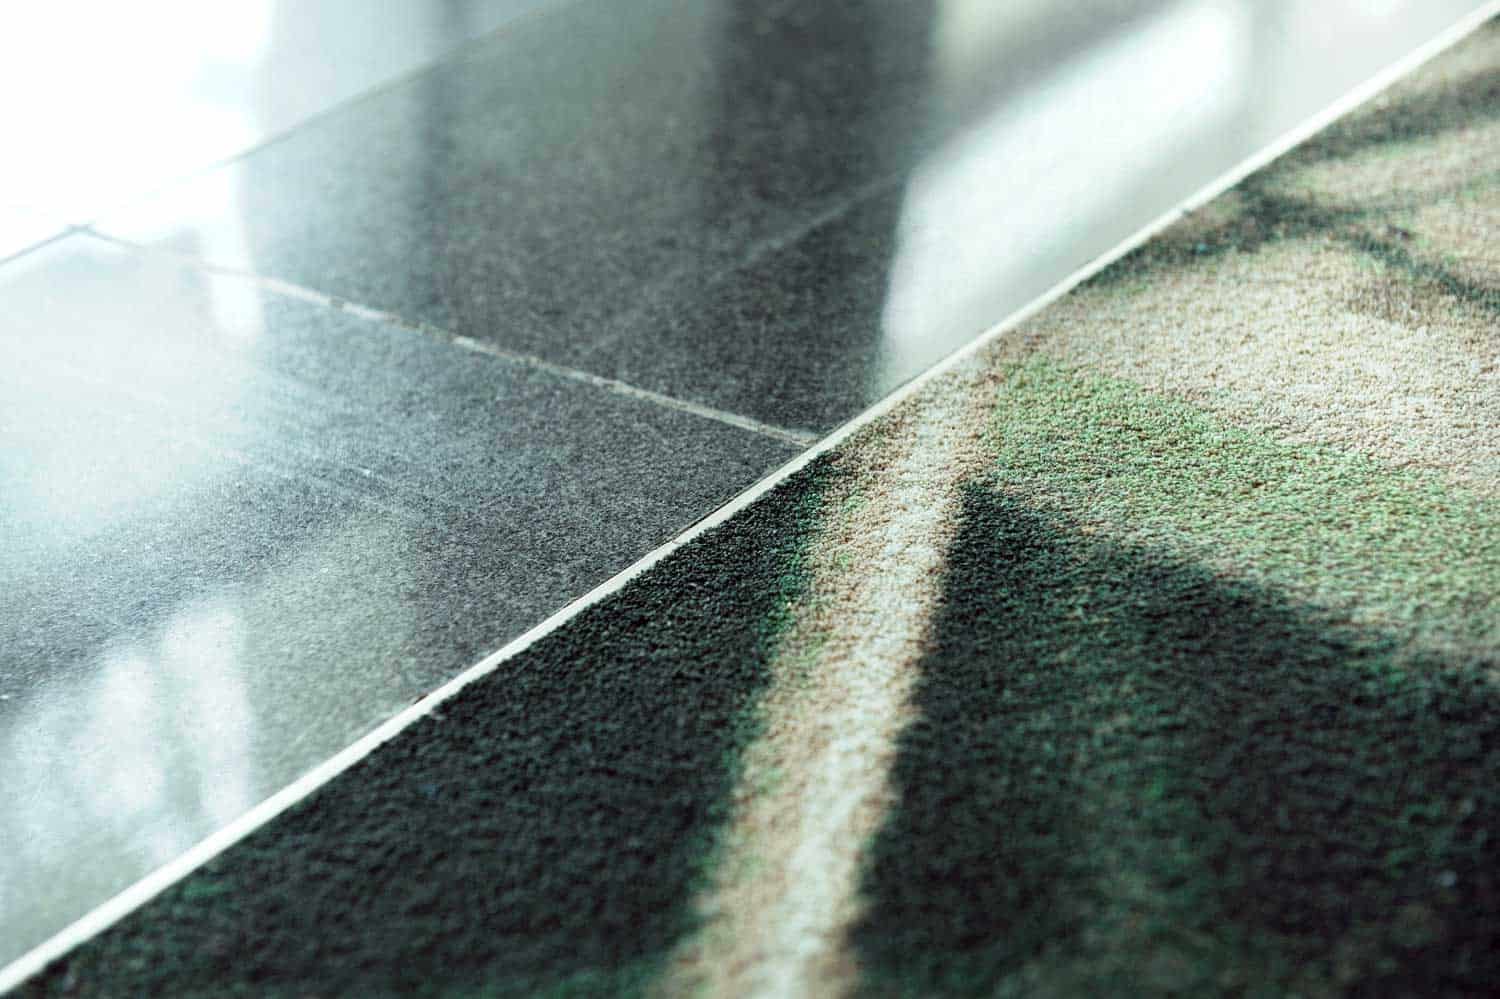 Aluminum threshold between tiles and carpet